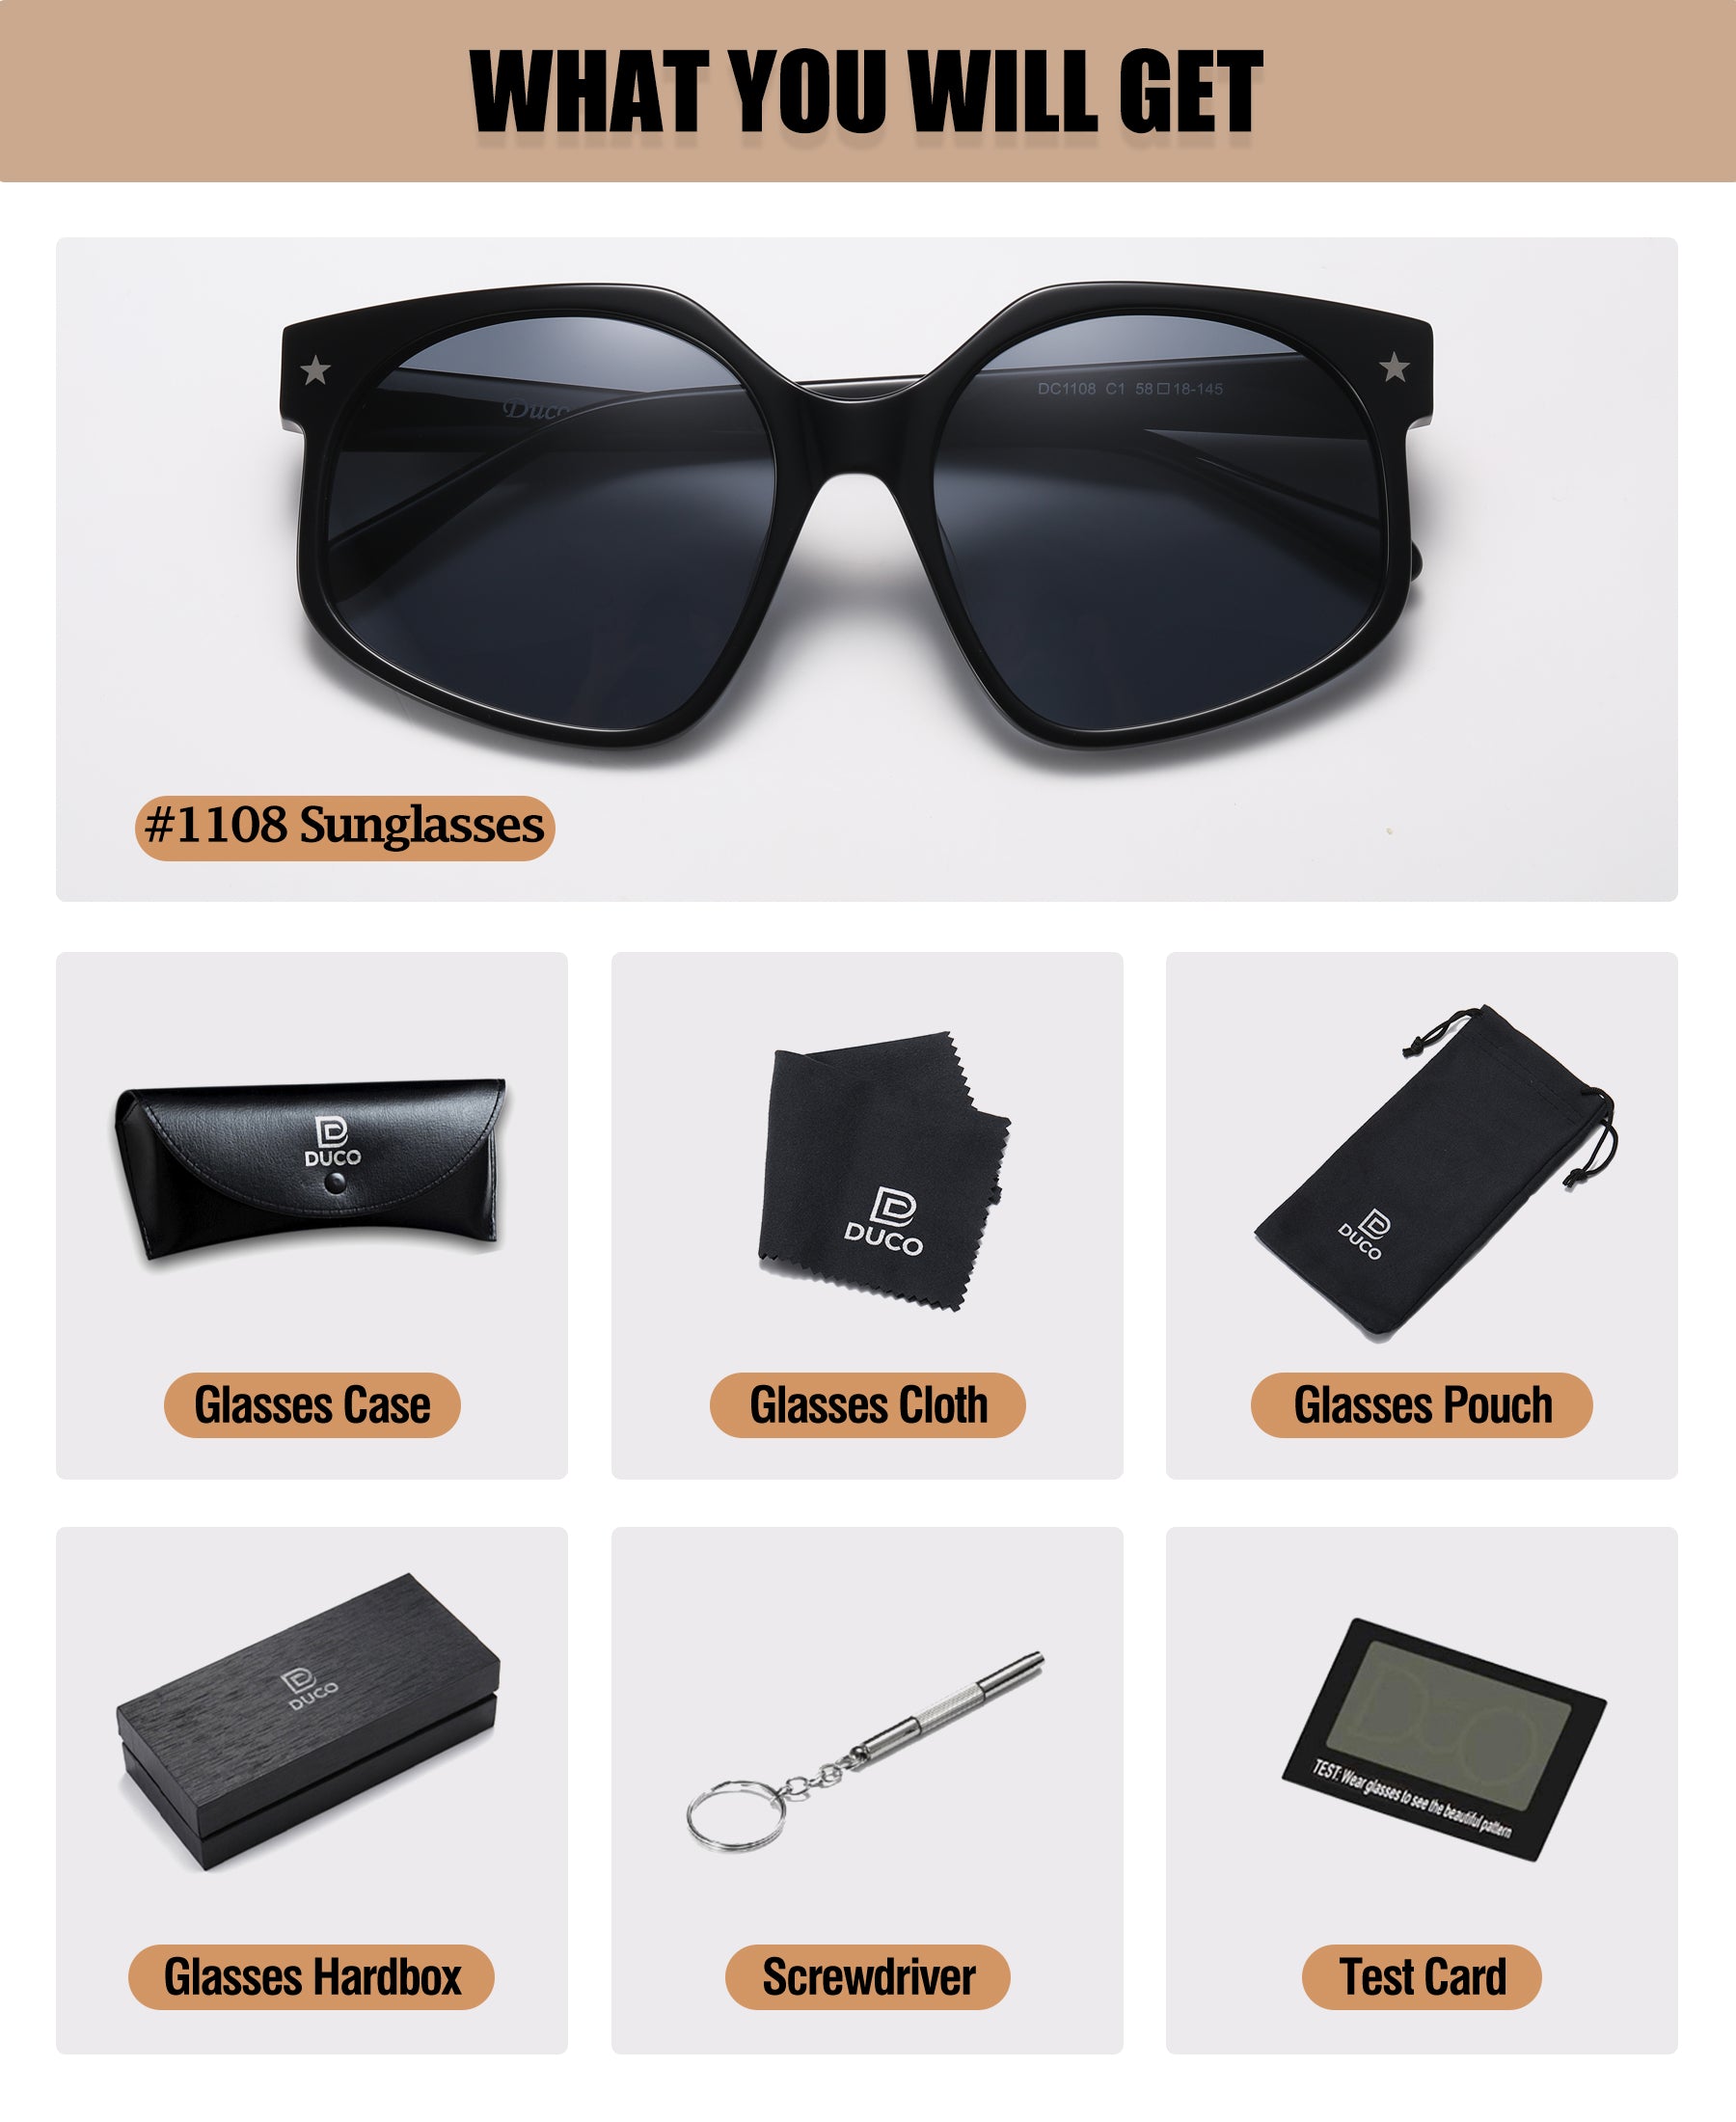 DUCO GLASSES-The right kind of shady DUCO Retro Oversized Square Polarized Sunglasses for Women Men Trendy Shades UV400 DC1108 Duco 